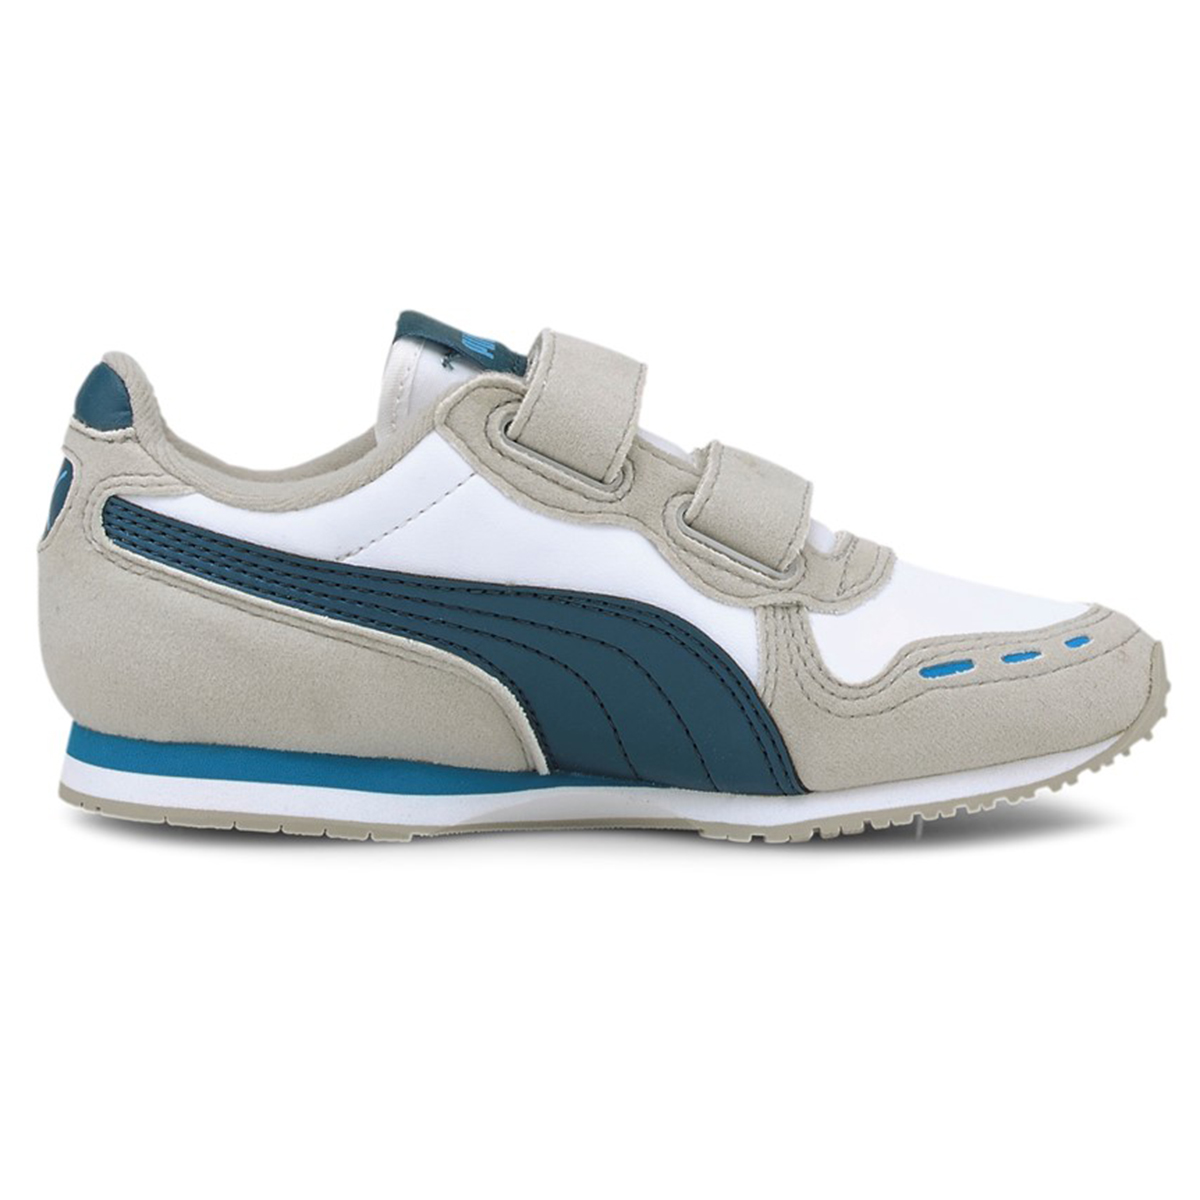 PUMA Cabana Racer SL V PS Kids Sneaker Schuhe Grau/ Blau 360732 